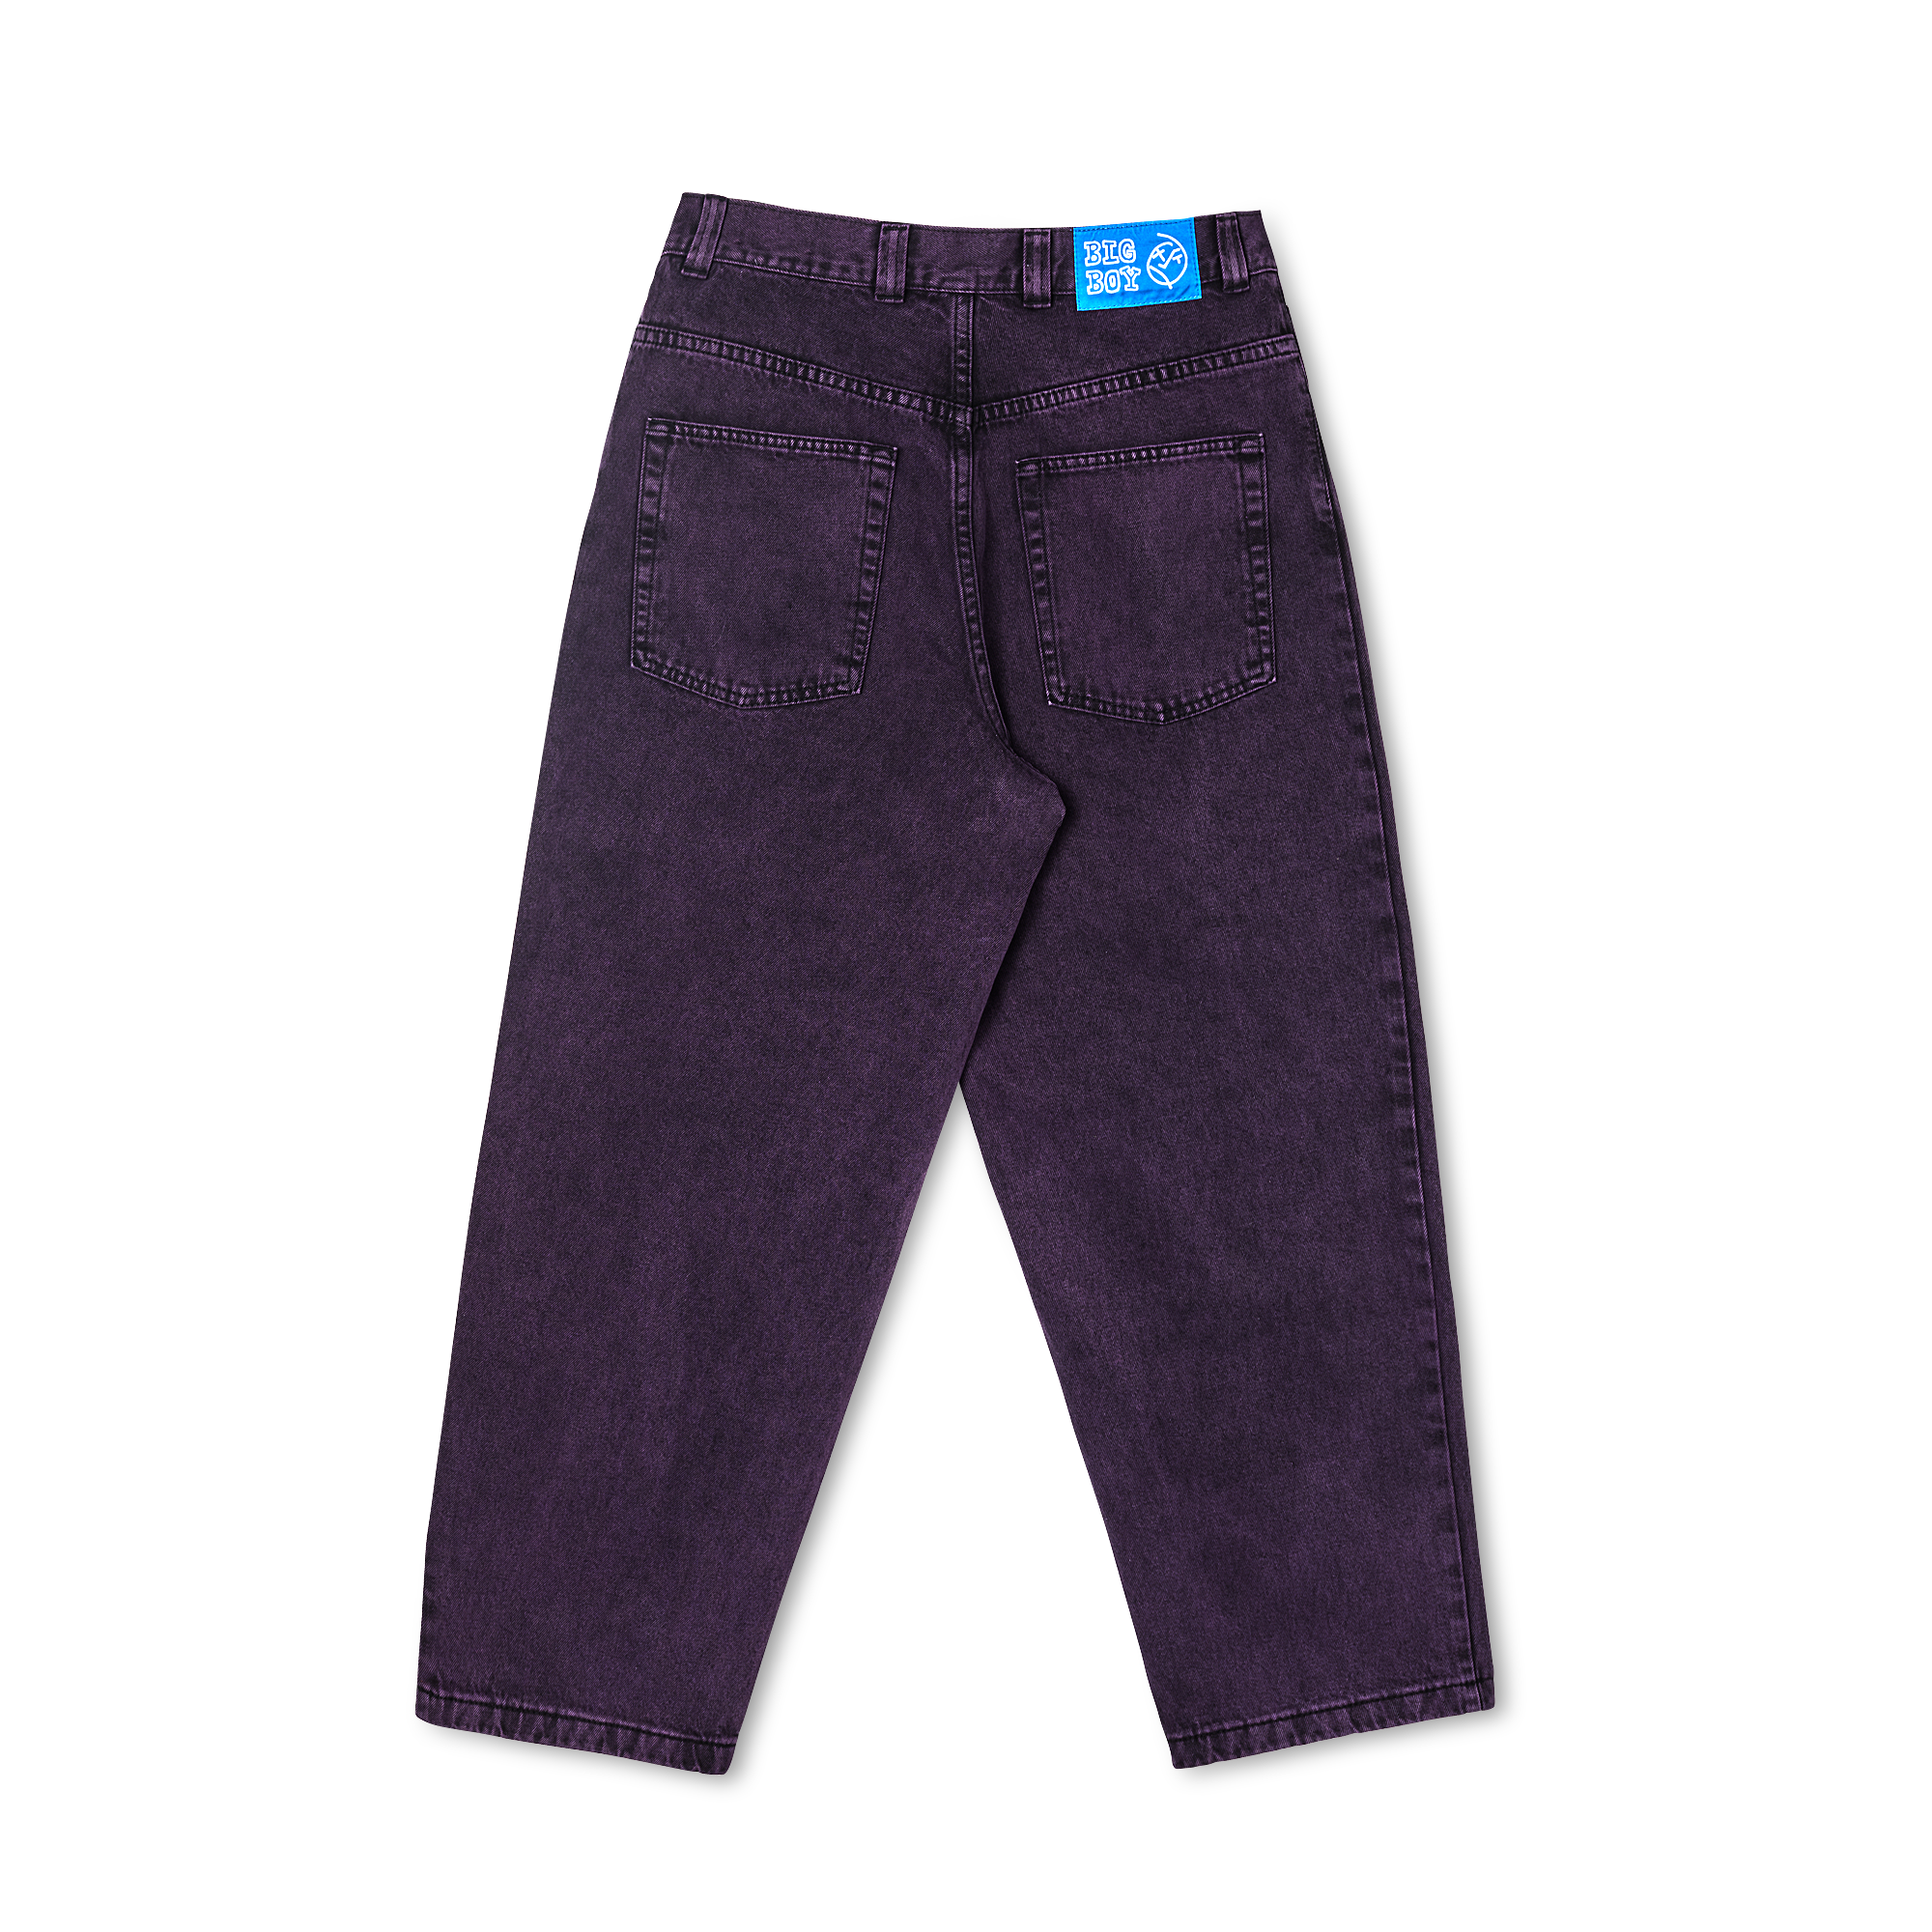 Polar Big Boy Jeans - Brown Black / Light Blue / Purple Black